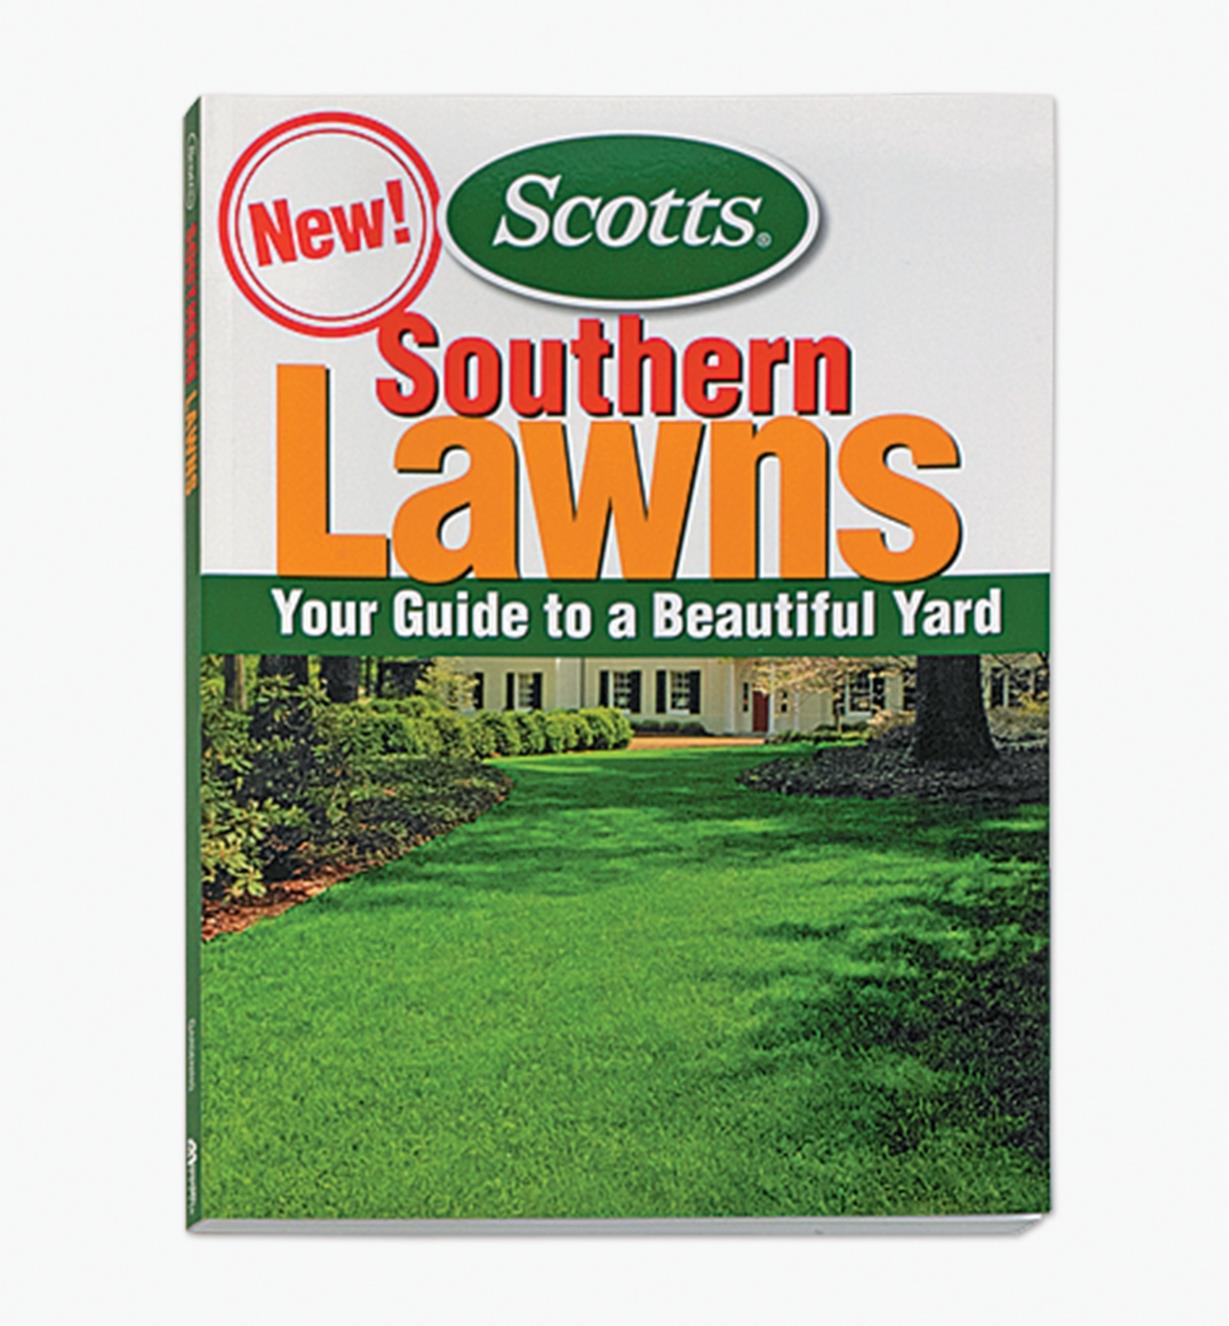 Scott’s Southern Lawns